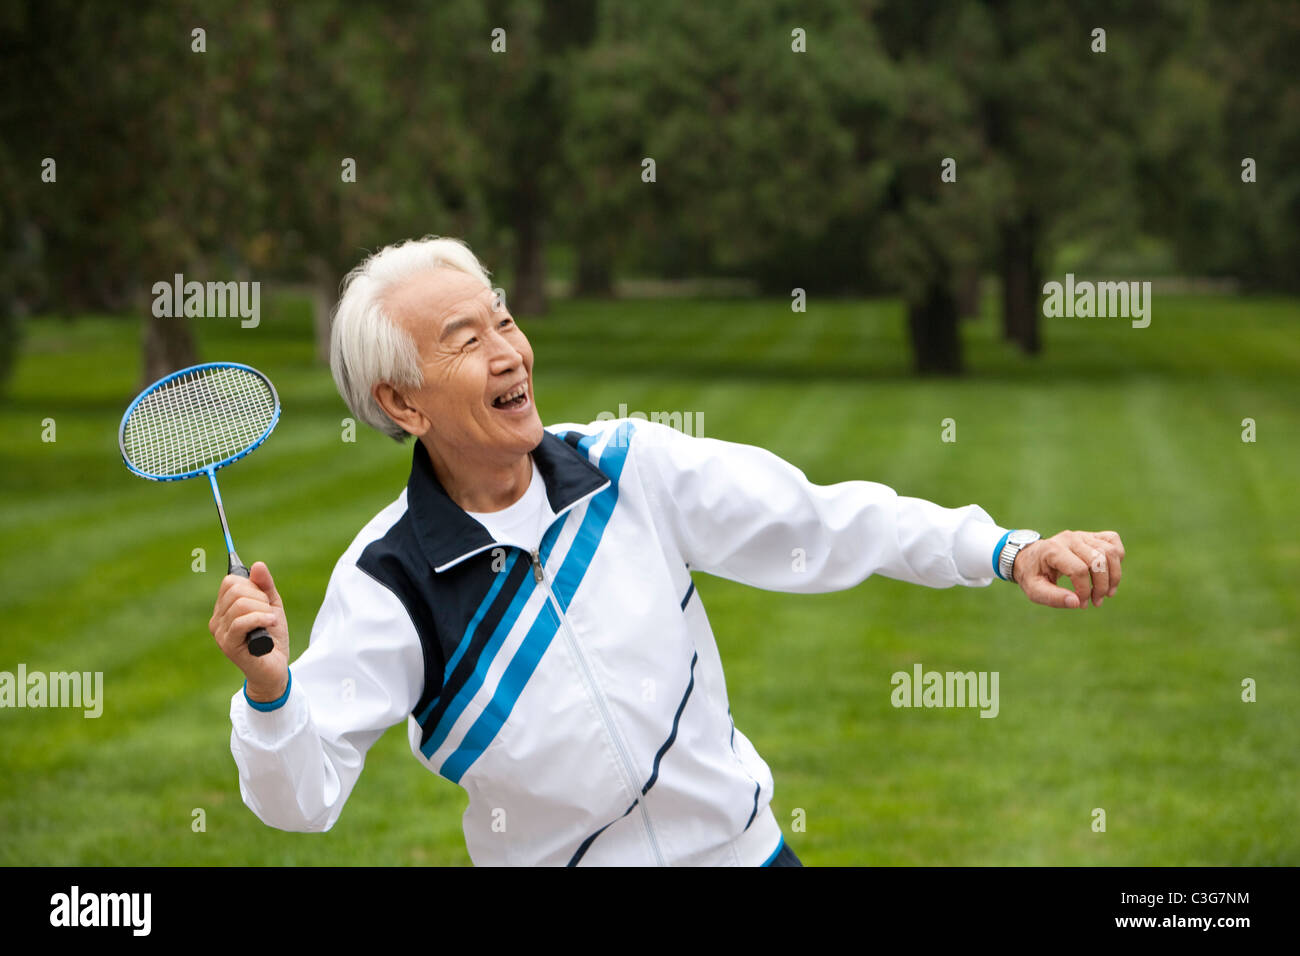 Senior Man Playing Badminton in a Park Stock Photo - Alamy